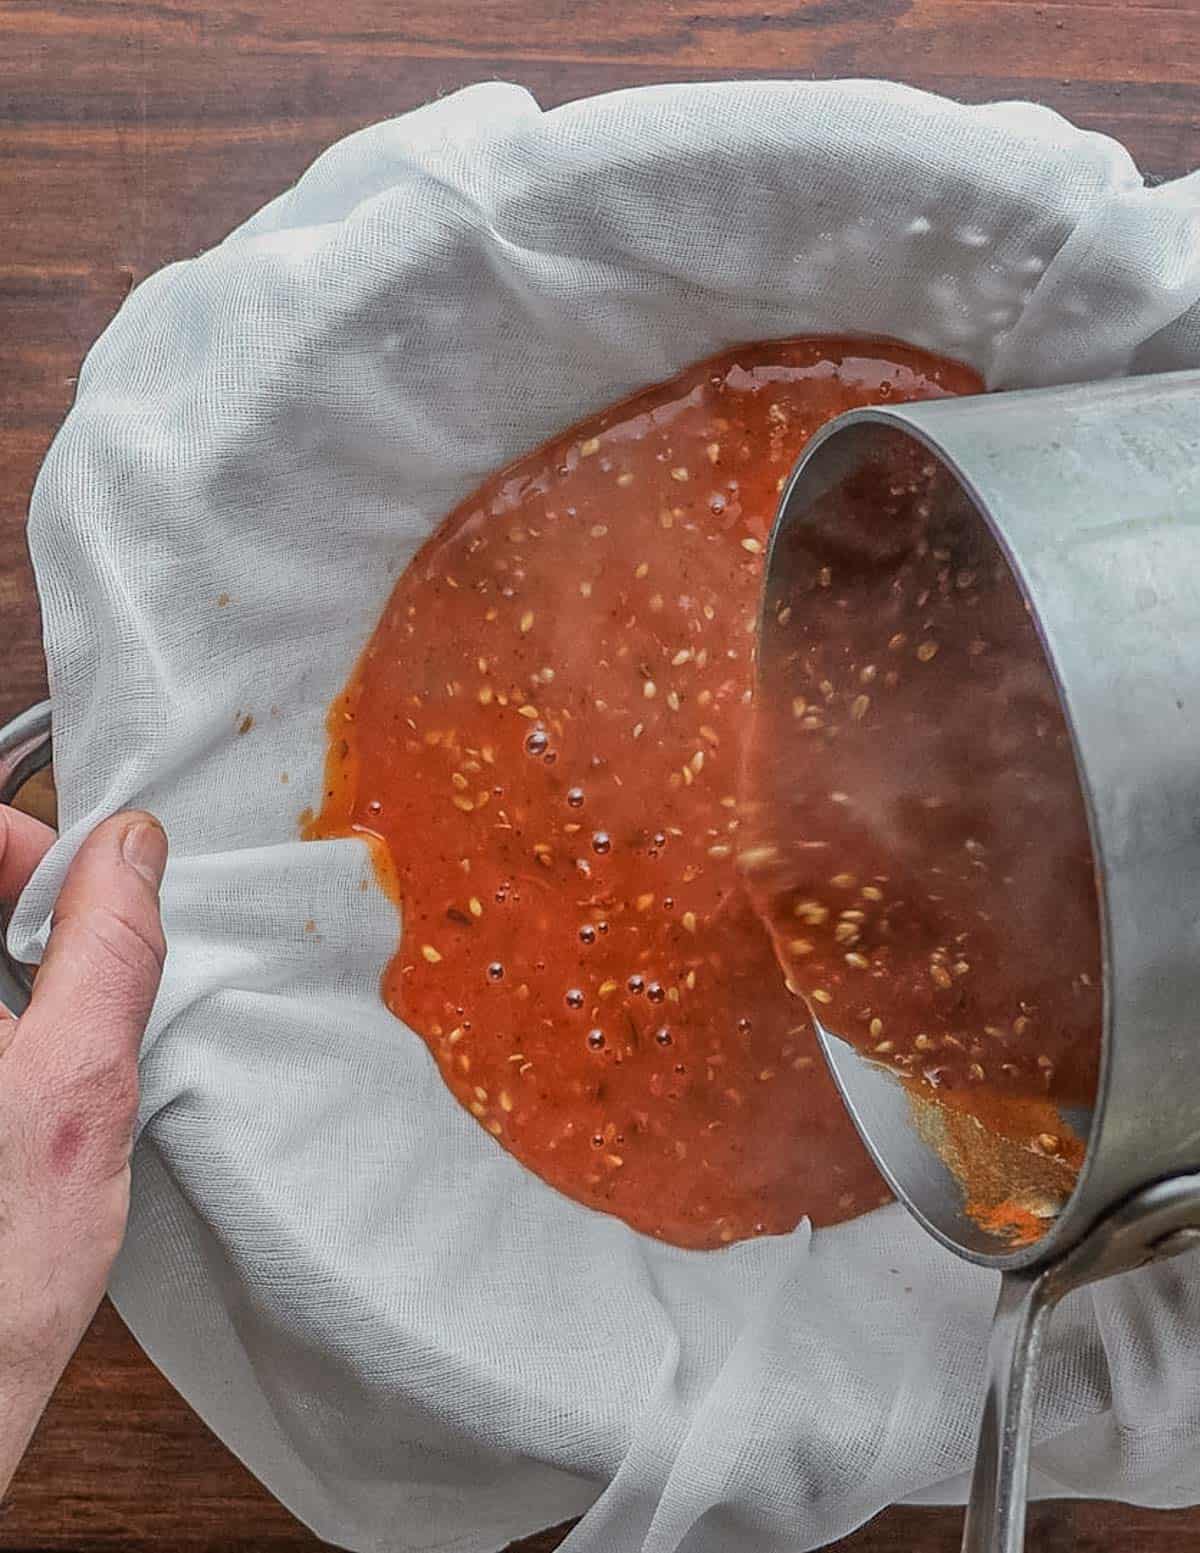 Straining rose hip liquid through cheesecloth. 